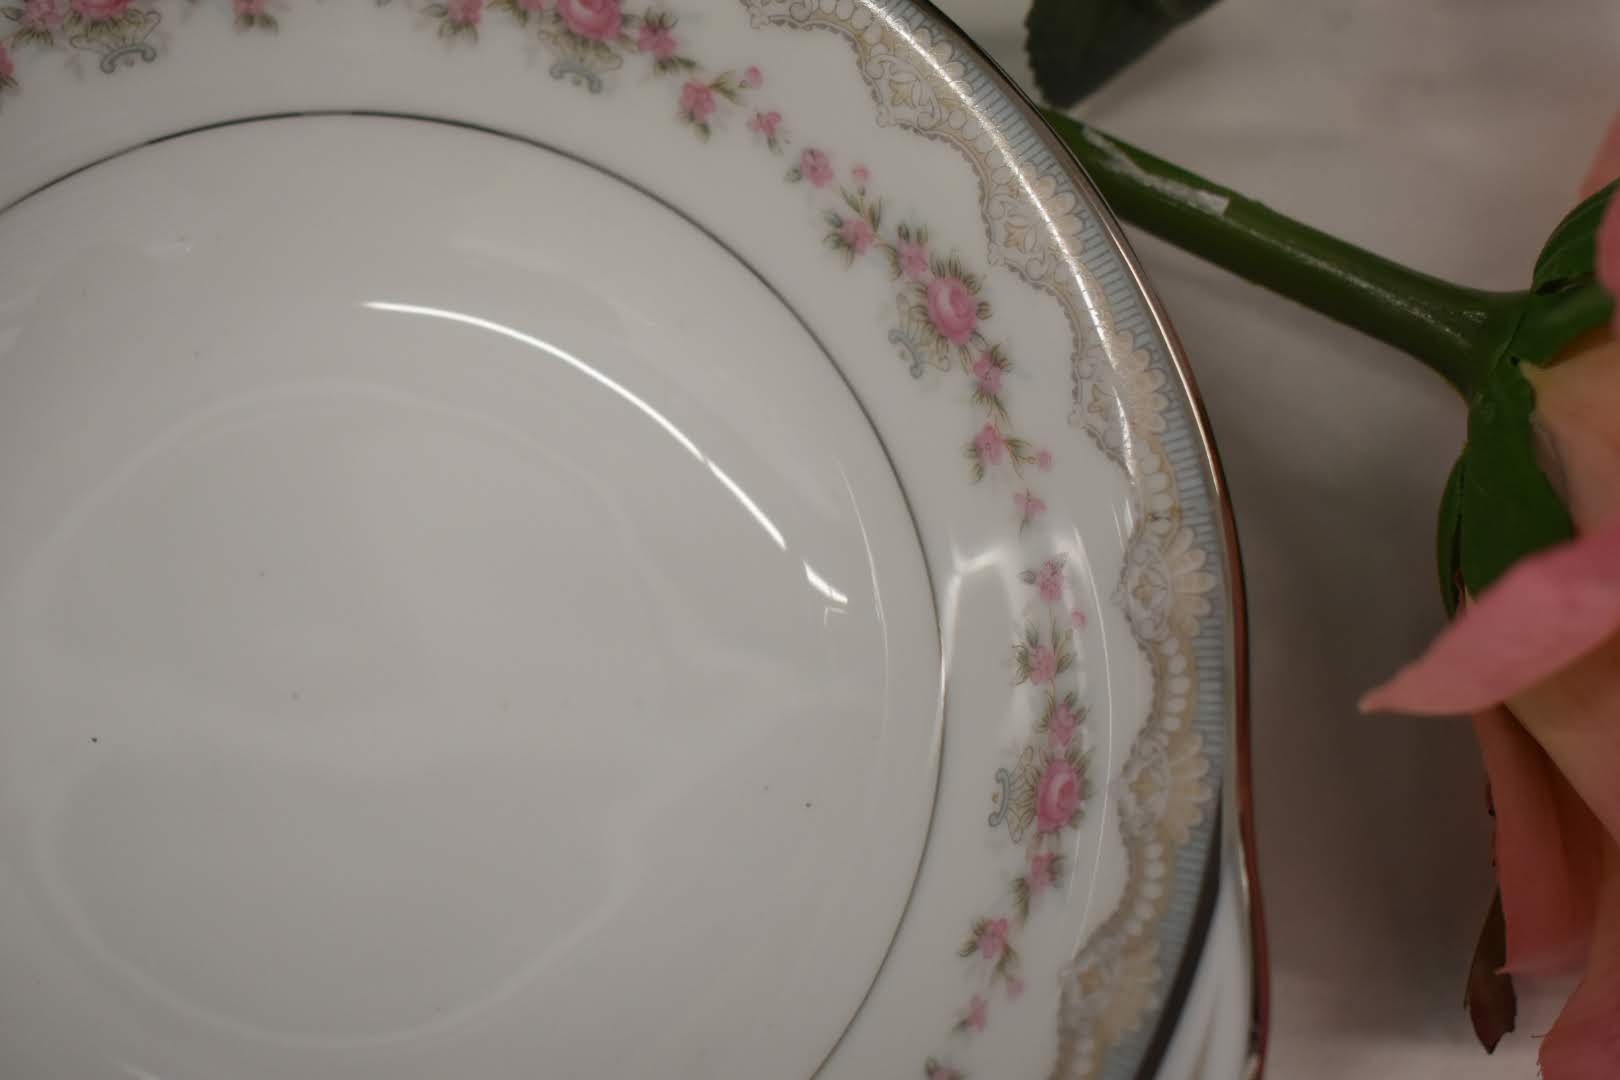 Noritake Glenwood - Fine Porcelain China - Platinum Rim - 5770 pattern - Small Round Vegetable Bowl with Handles